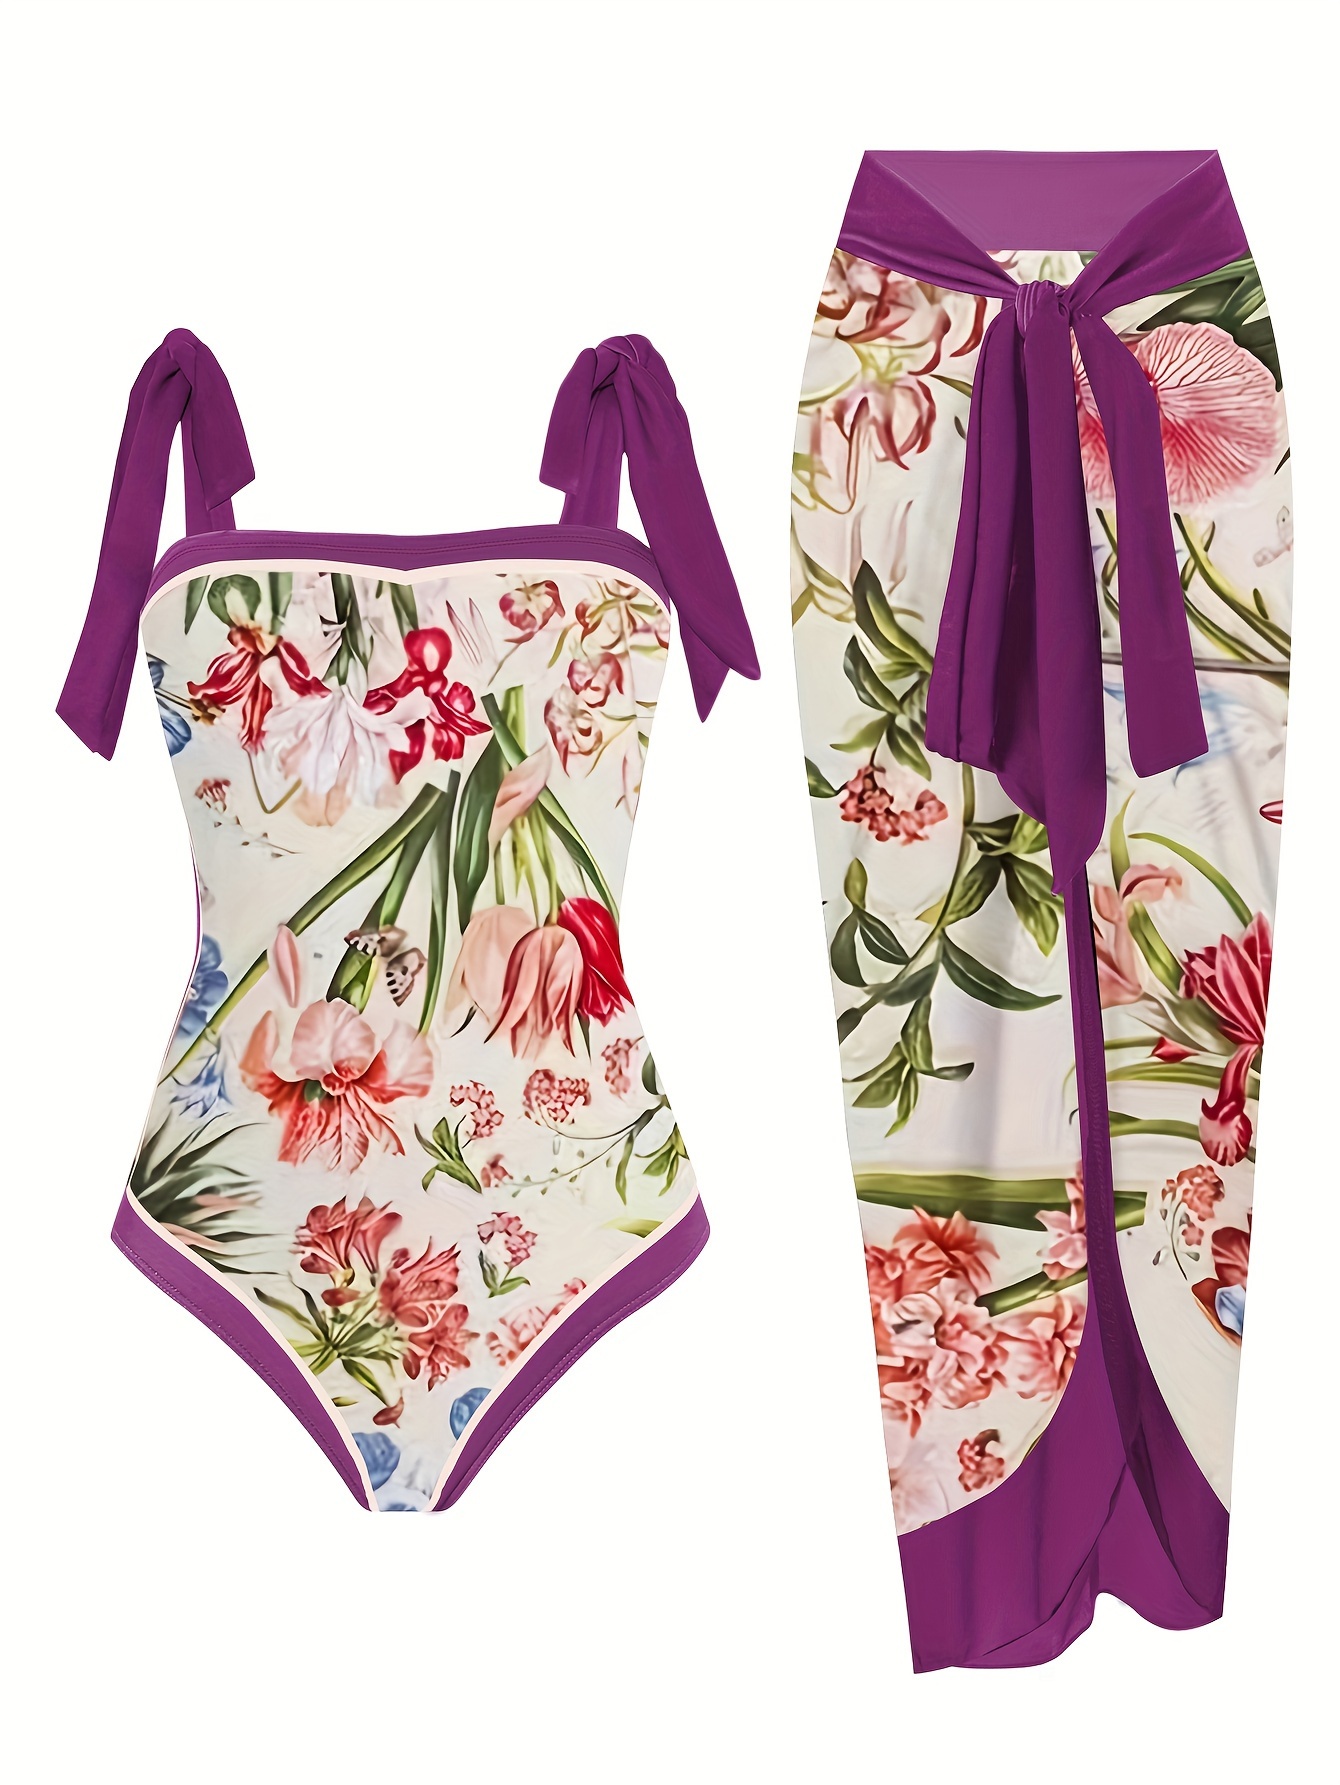 Plus Size Swim Dress For Women Two Piece Floral Print Tankini